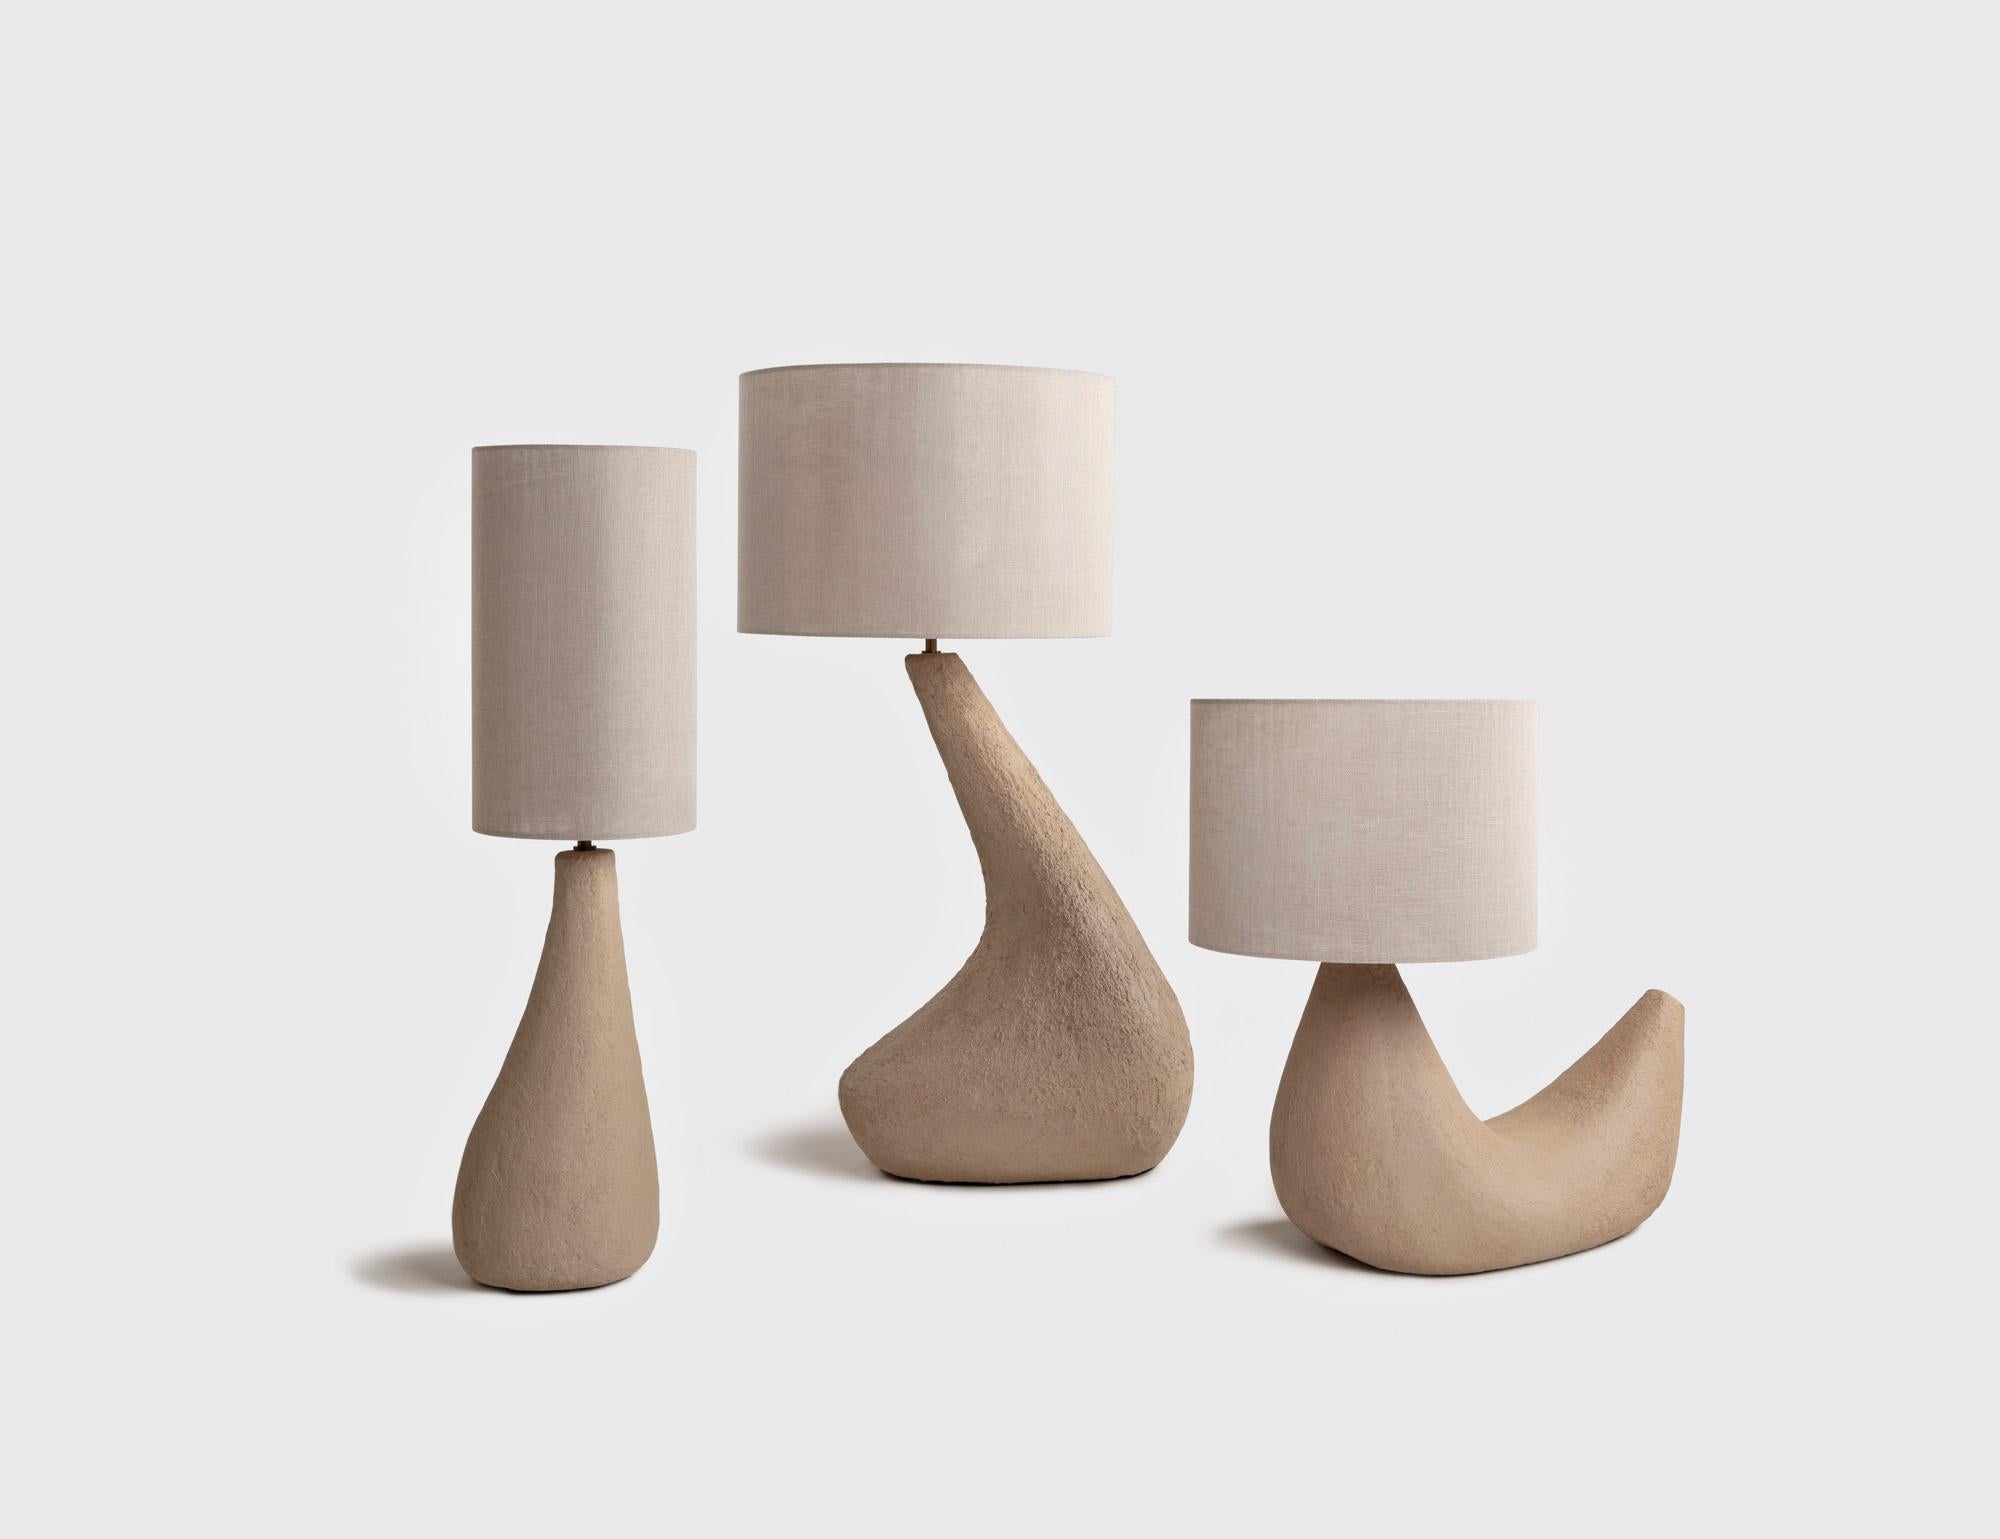 Brazilian Emiliano Handmade Ceramic Table Lamp For Sale